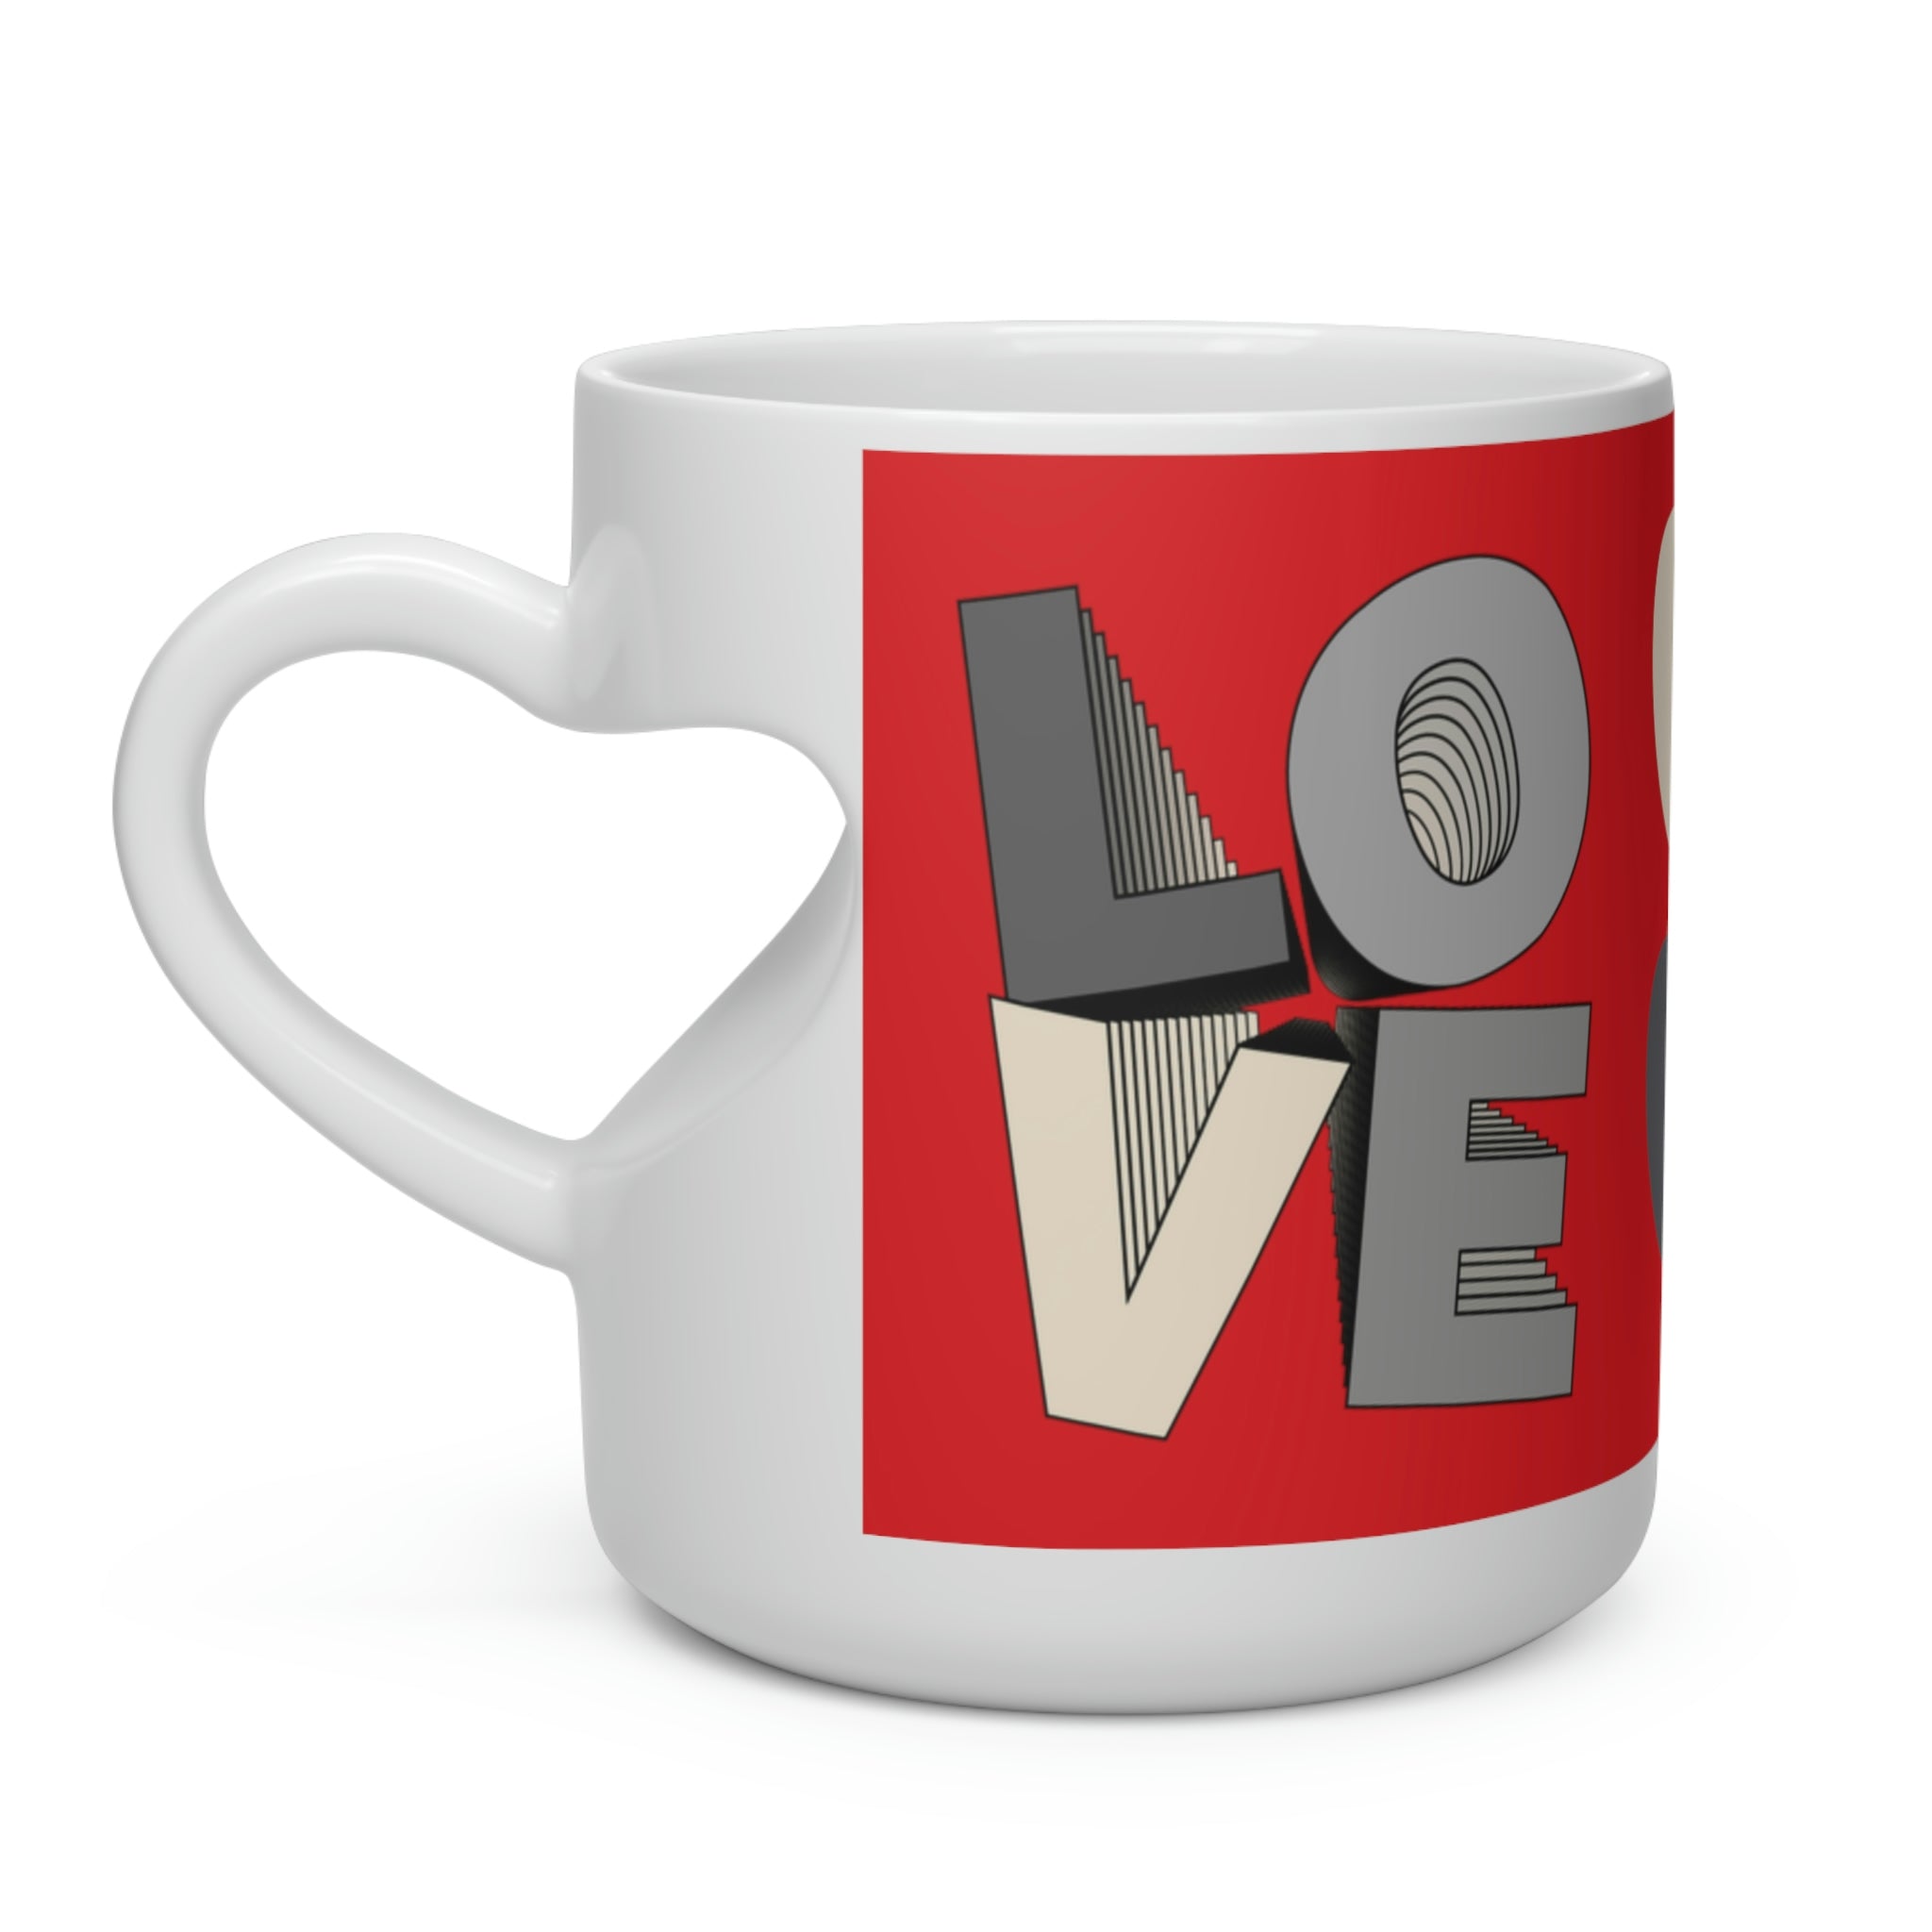 Herzförmige Tasse Layer Love 2 grau/rot 